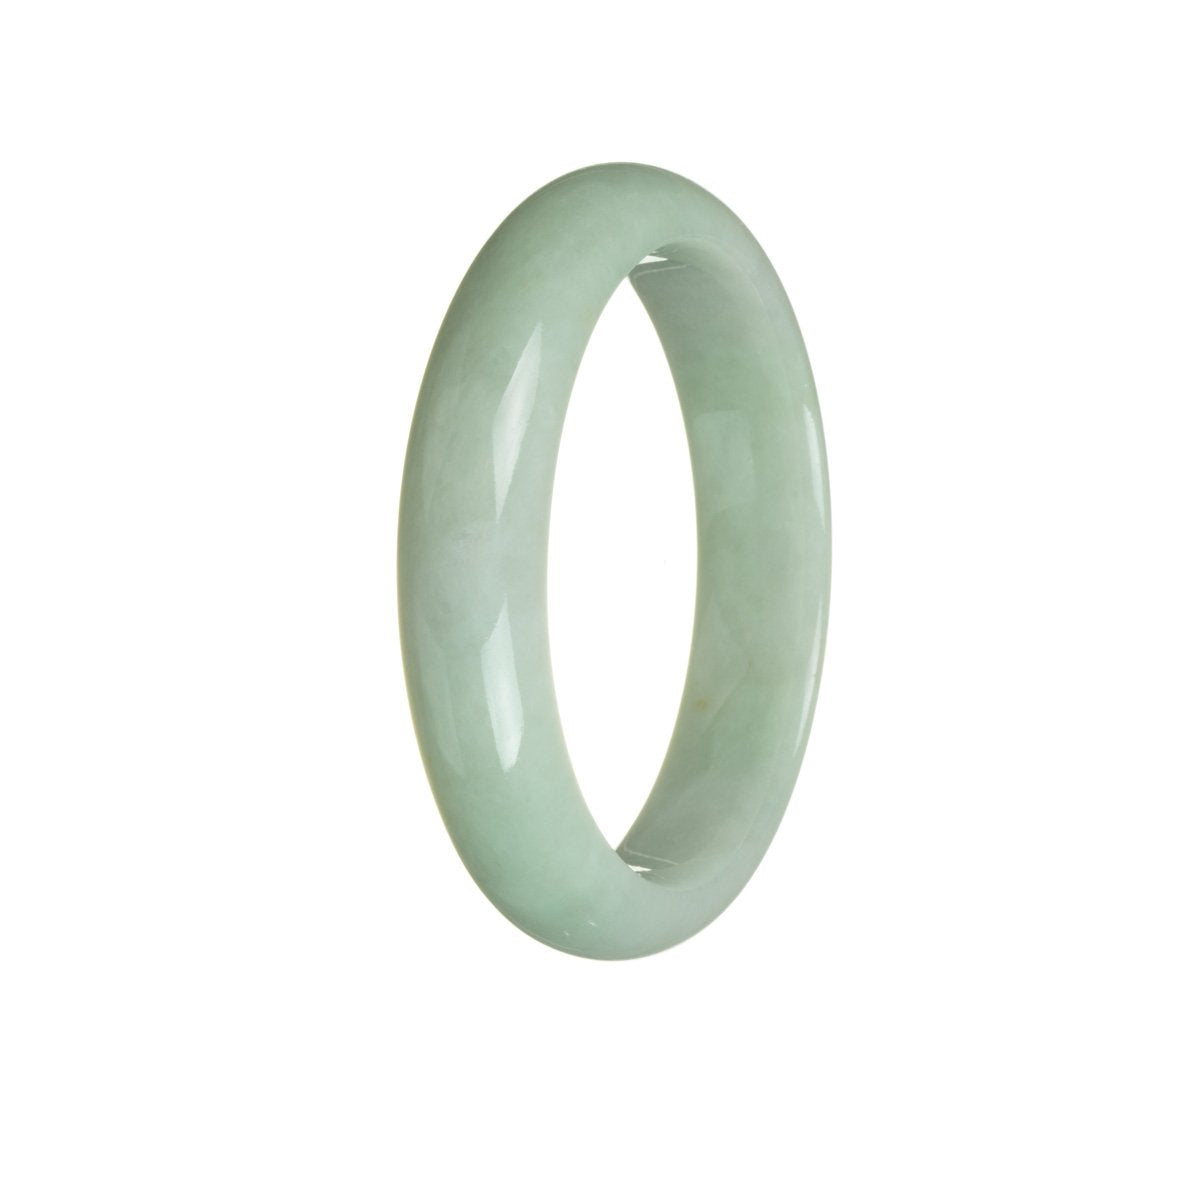 A beautiful, 59mm half moon-shaped bracelet made of certified Grade A Green Burmese Jade, sold by MAYS GEMS.